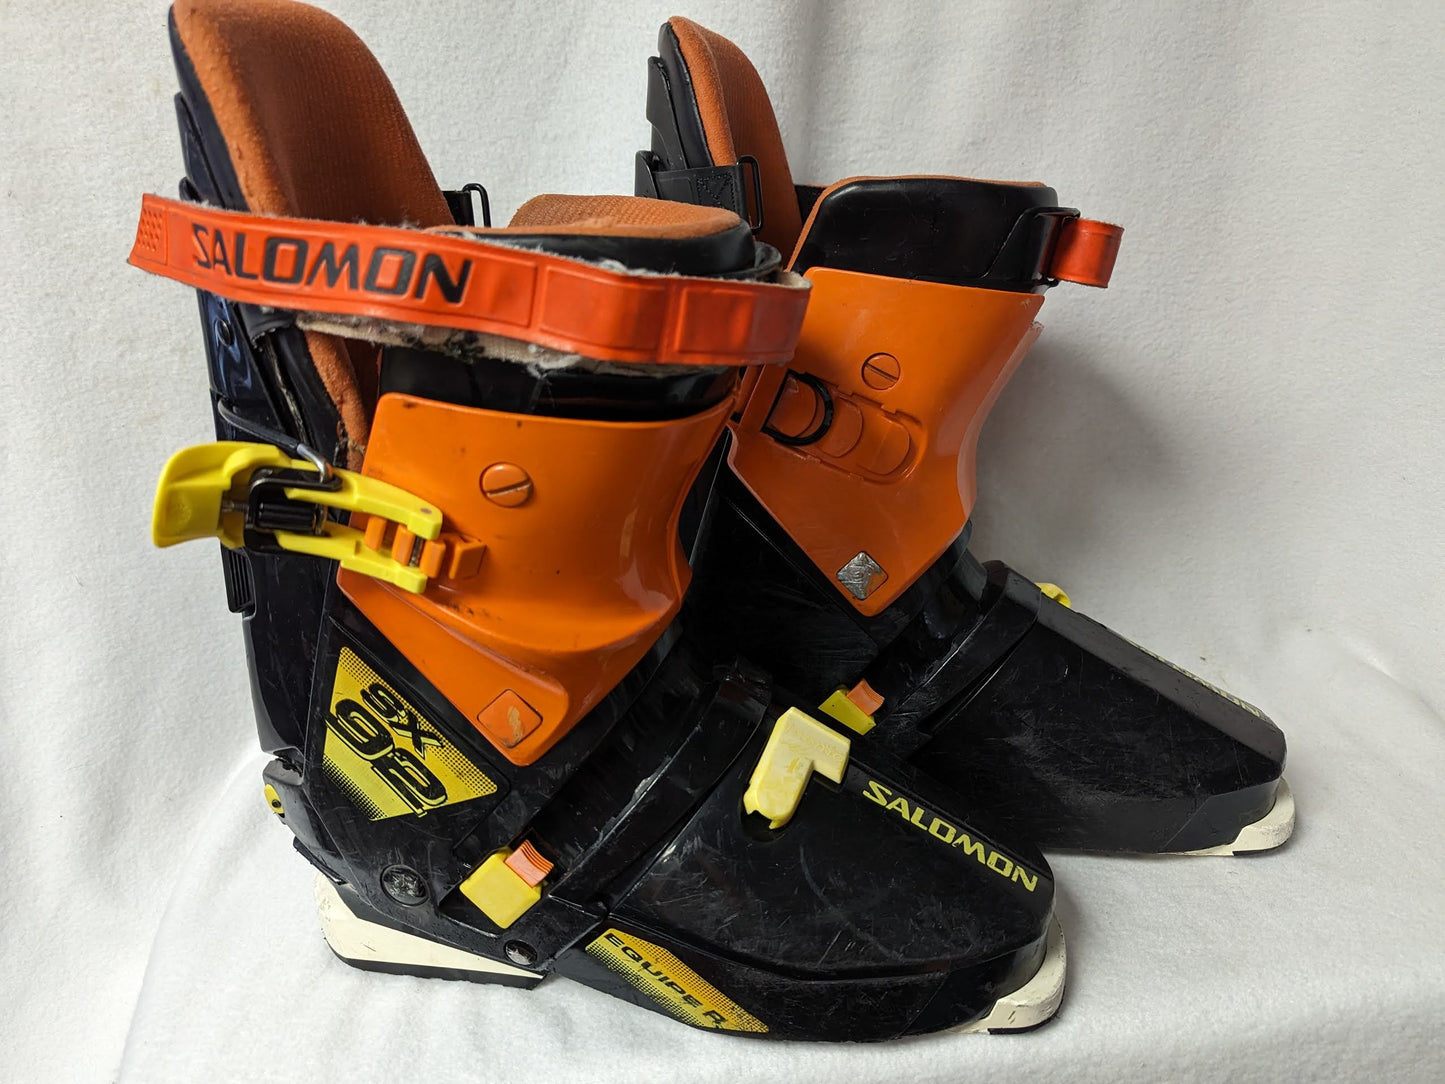 Salomon SX92 Equipe R Rear Entry Ski Boots Size 28 Color Black Condition Used